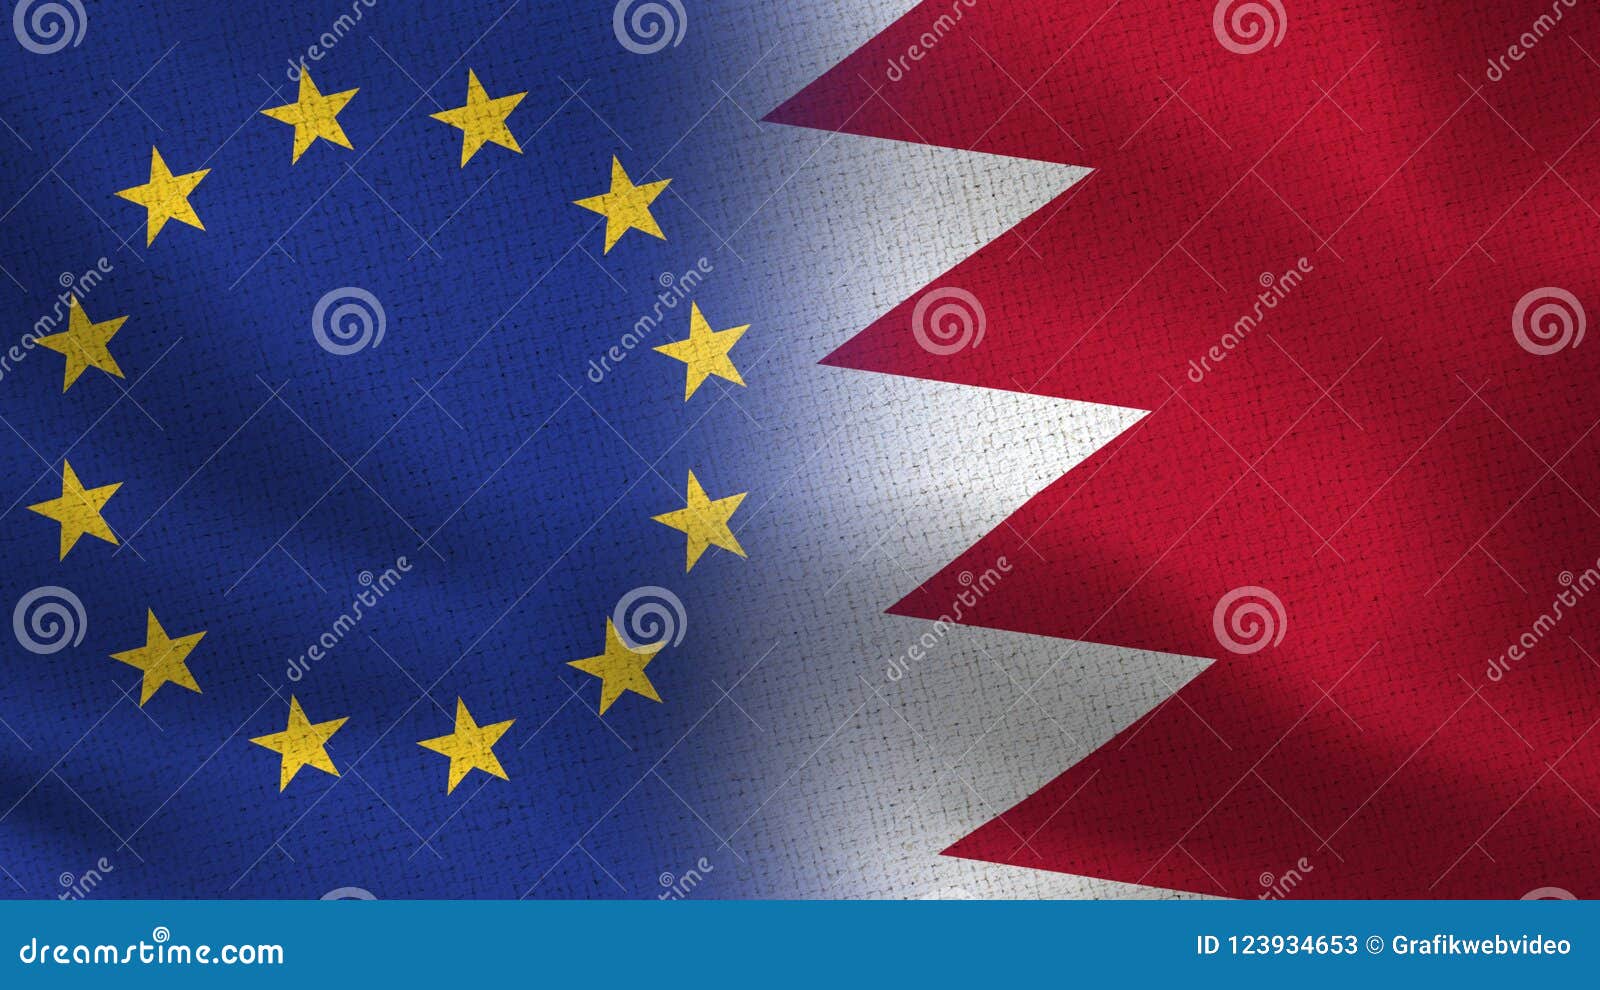 eu and bahrain realistic half flags together - european union bahrein